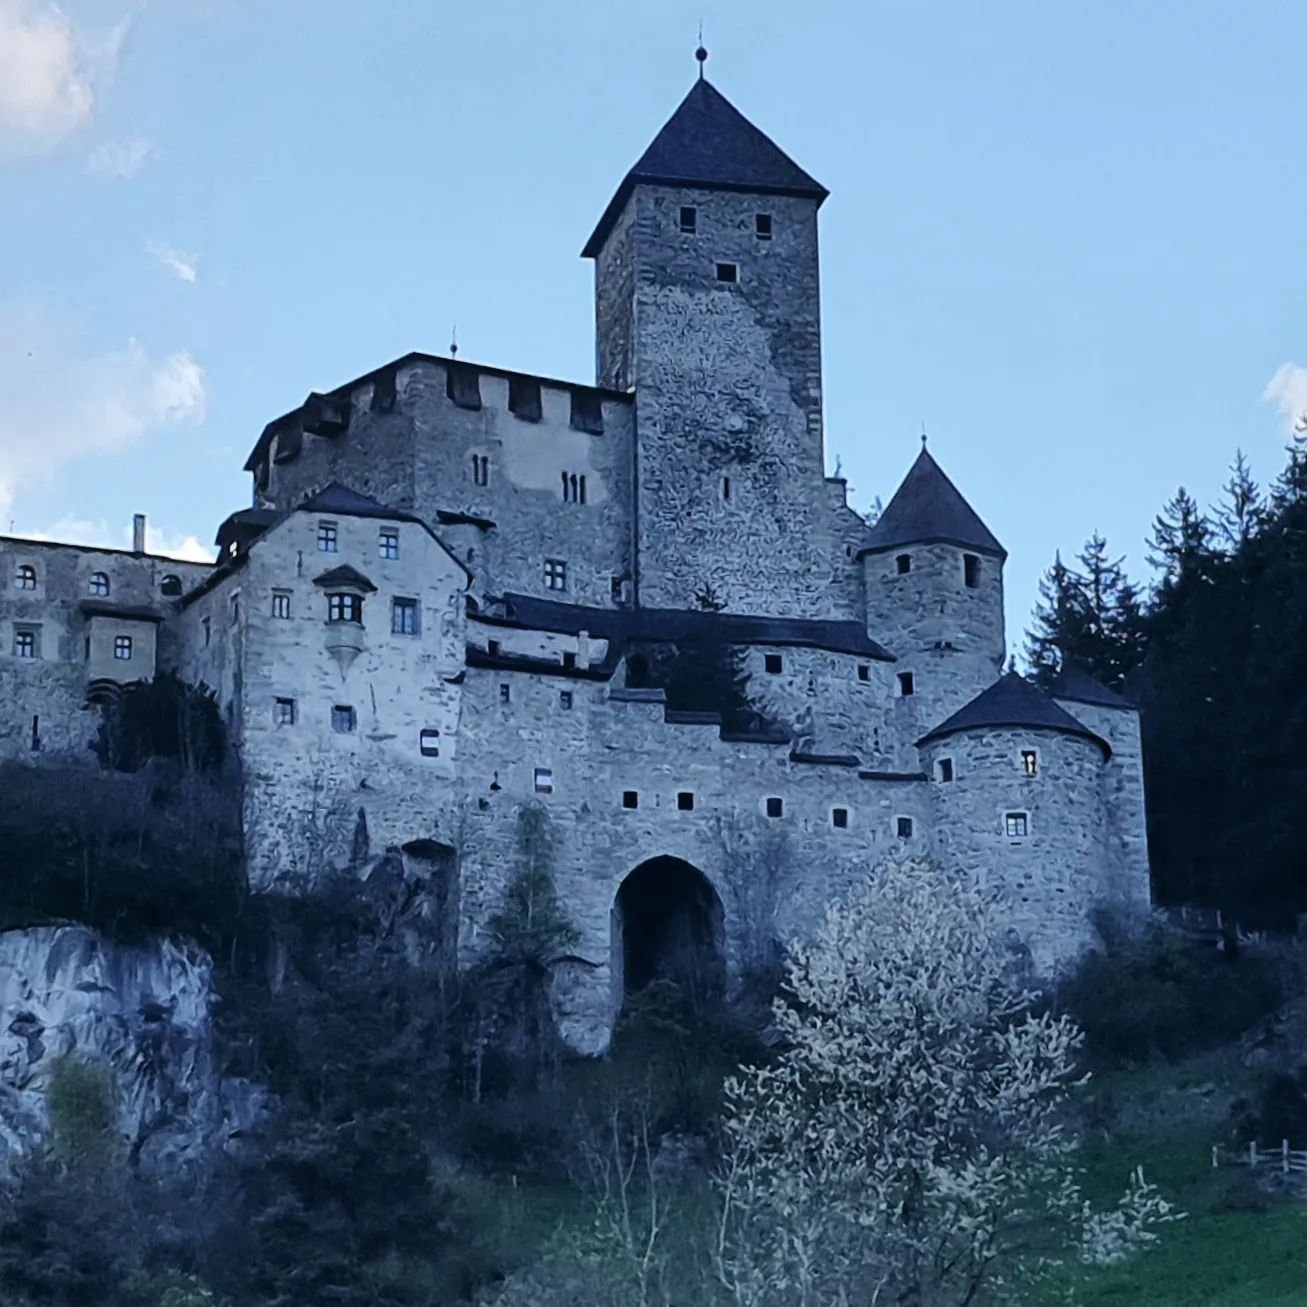 Castel Tures / Burg Taufers

#tiroldelsur #s&uuml;dtirol #southtyrol #altoadigio #altoadige  #castillo #castillosdelmundo #viajaraitalia #italy  #guidatrentino #guiadolomitastrentino